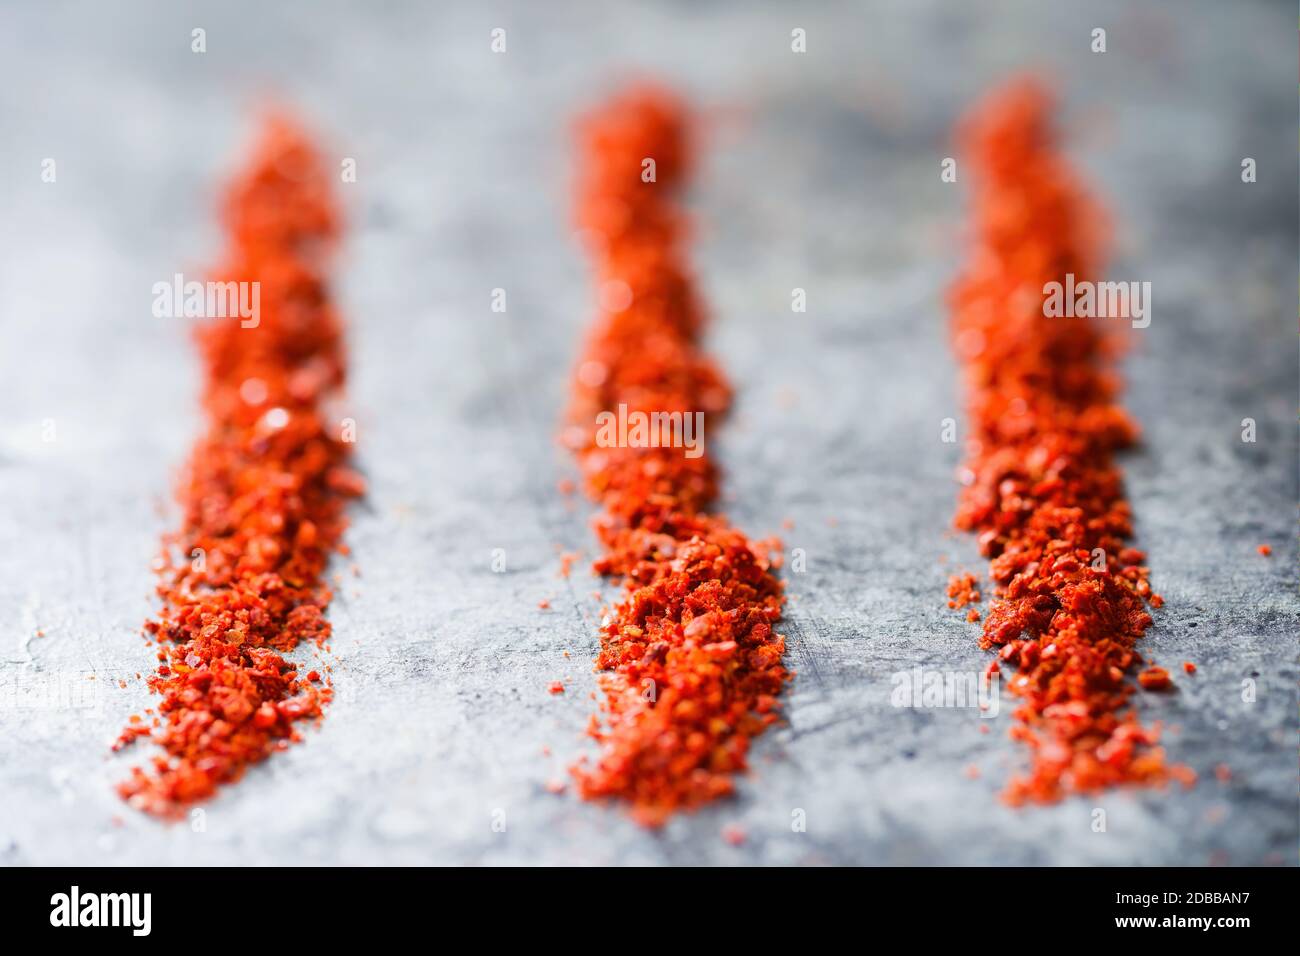 spicy food addiction concept Stock Photo